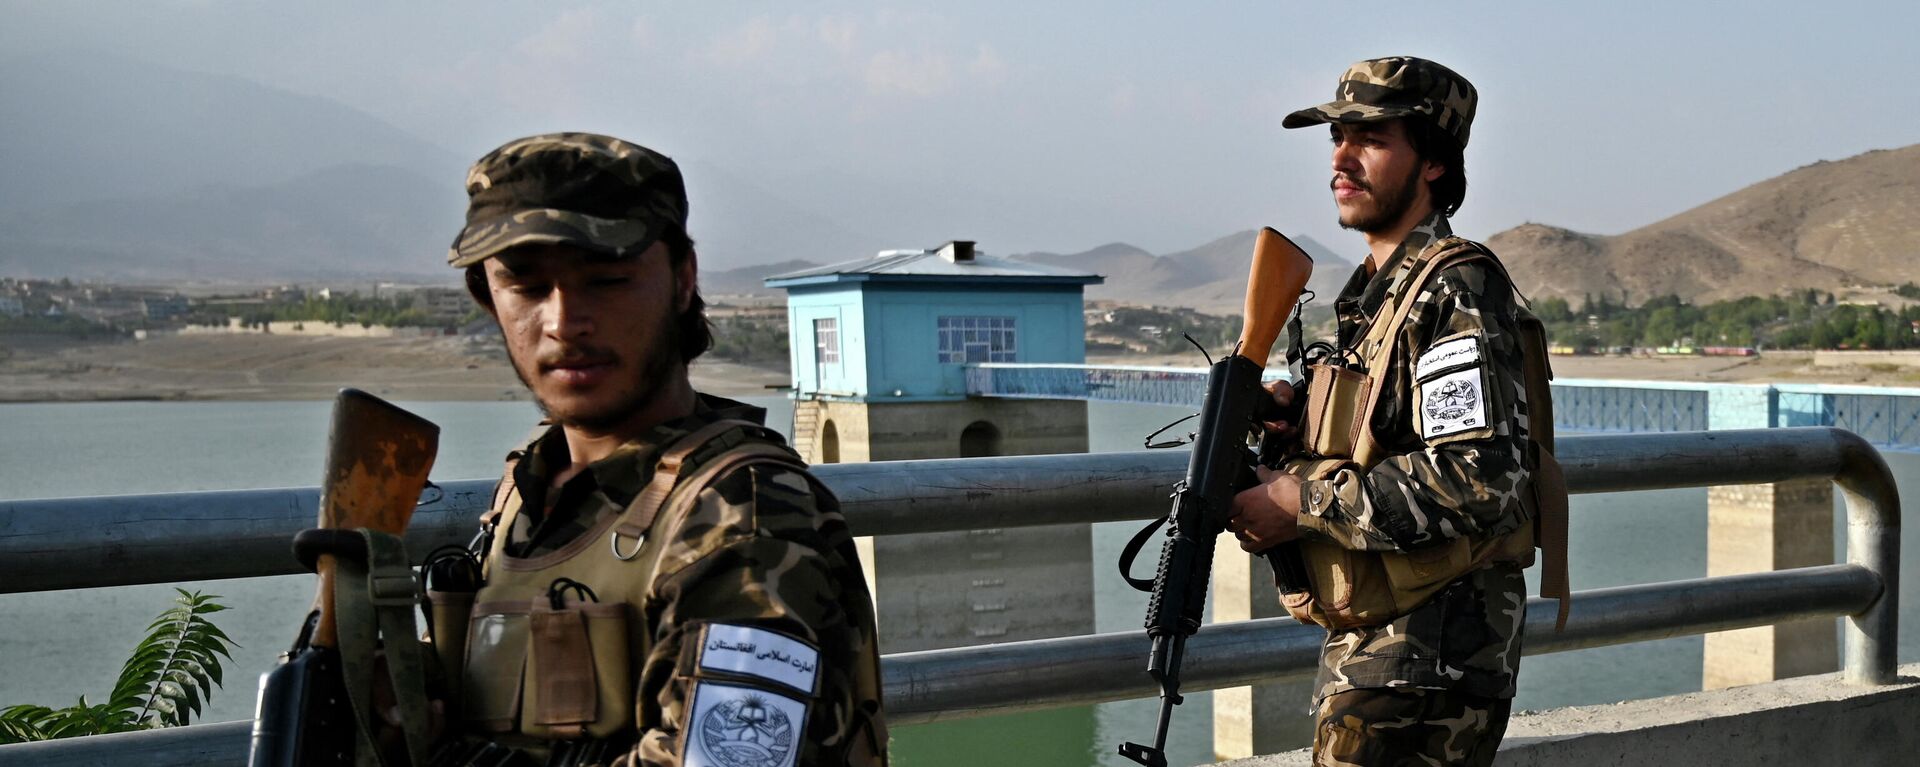 Боевики Талибана патрулируют дорогу у озера Карга на окраине Кабула - Sputnik Таджикистан, 1920, 10.11.2021